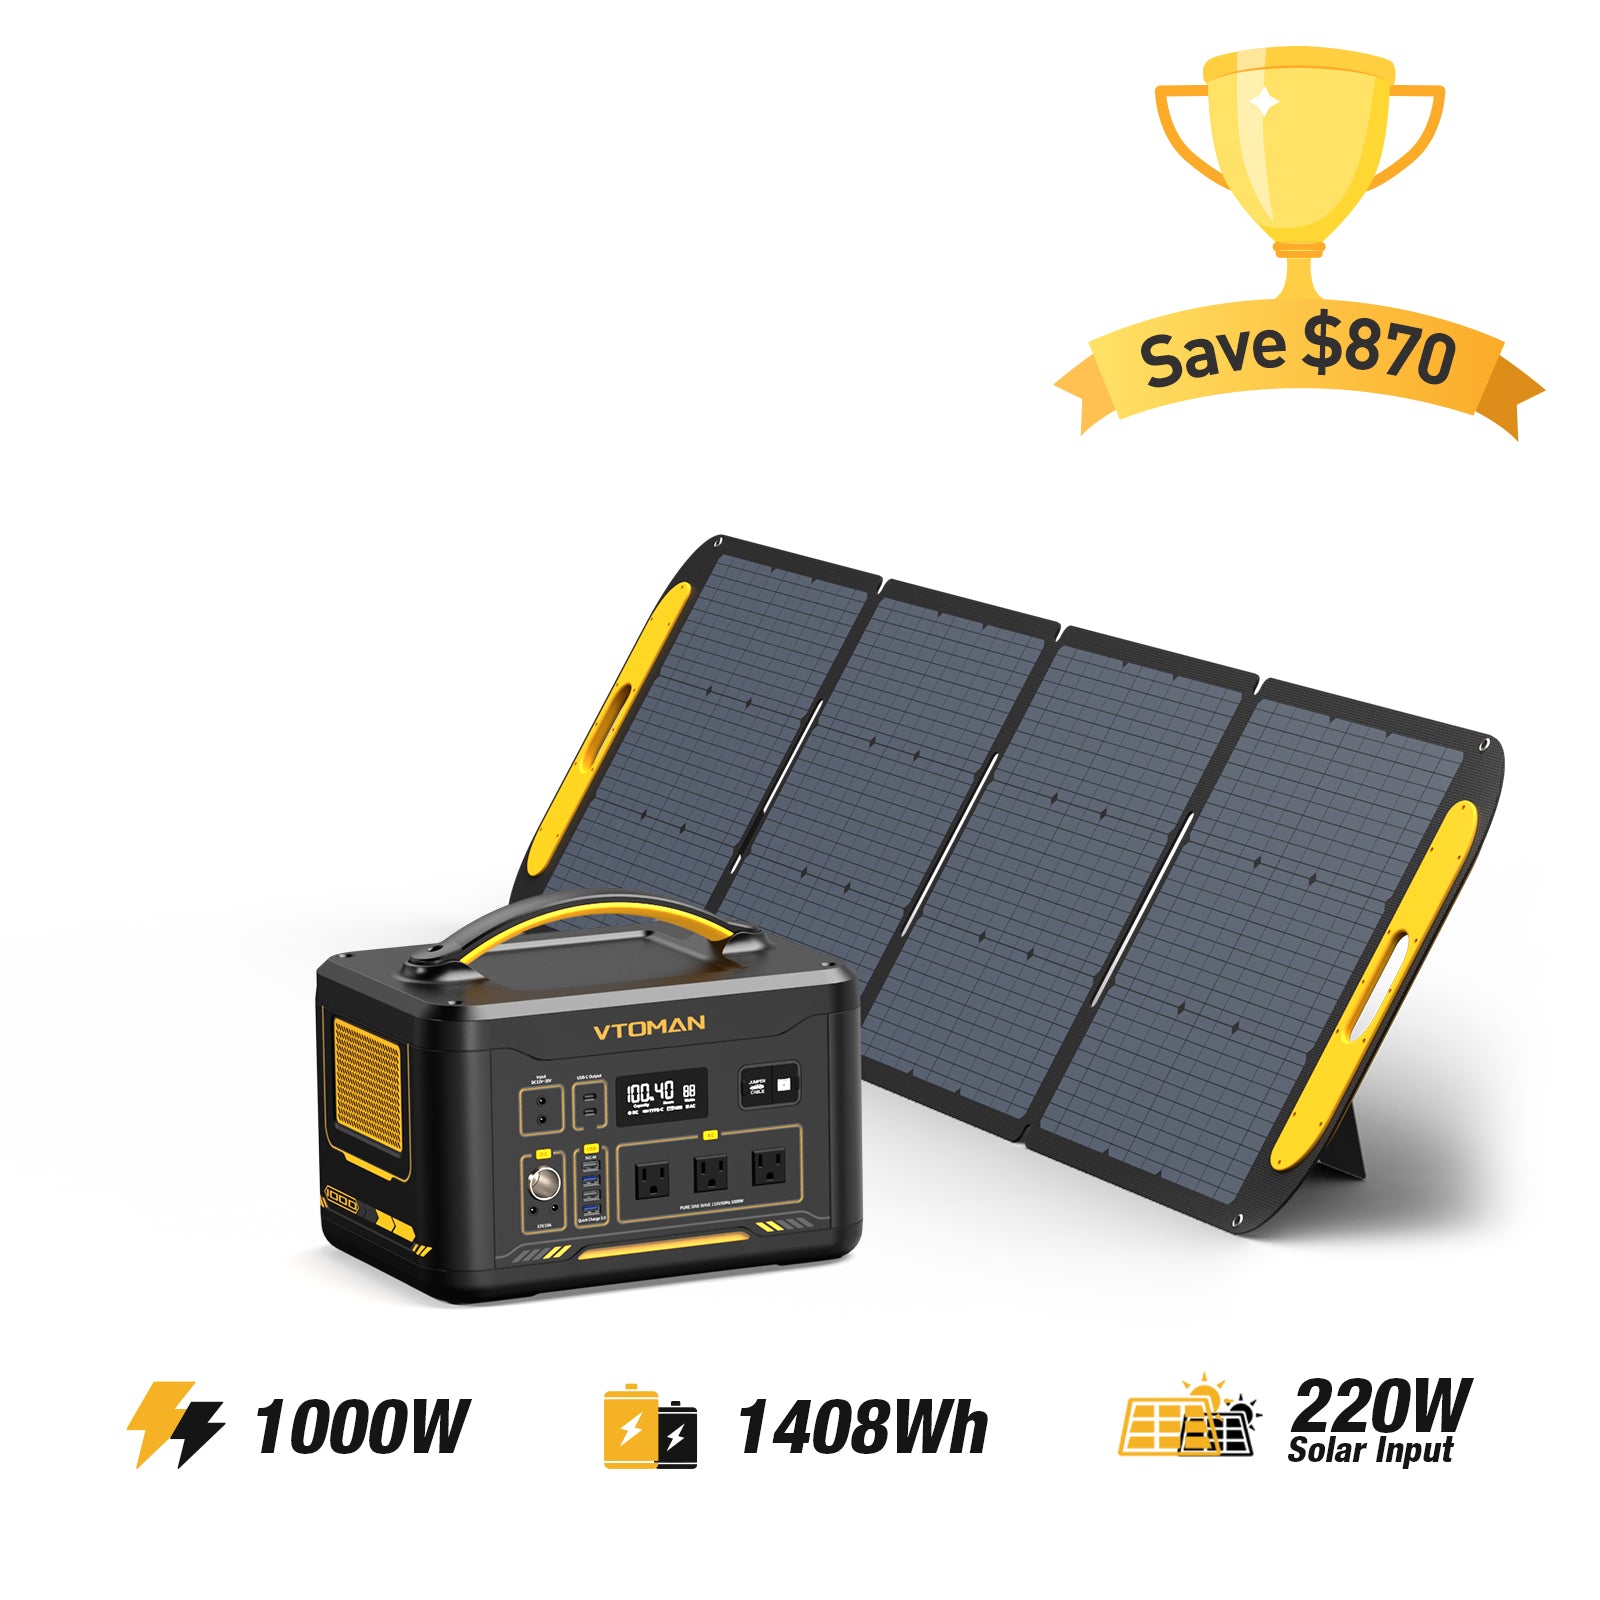 Jump 1000W/1408Wh 220W Solar Generator